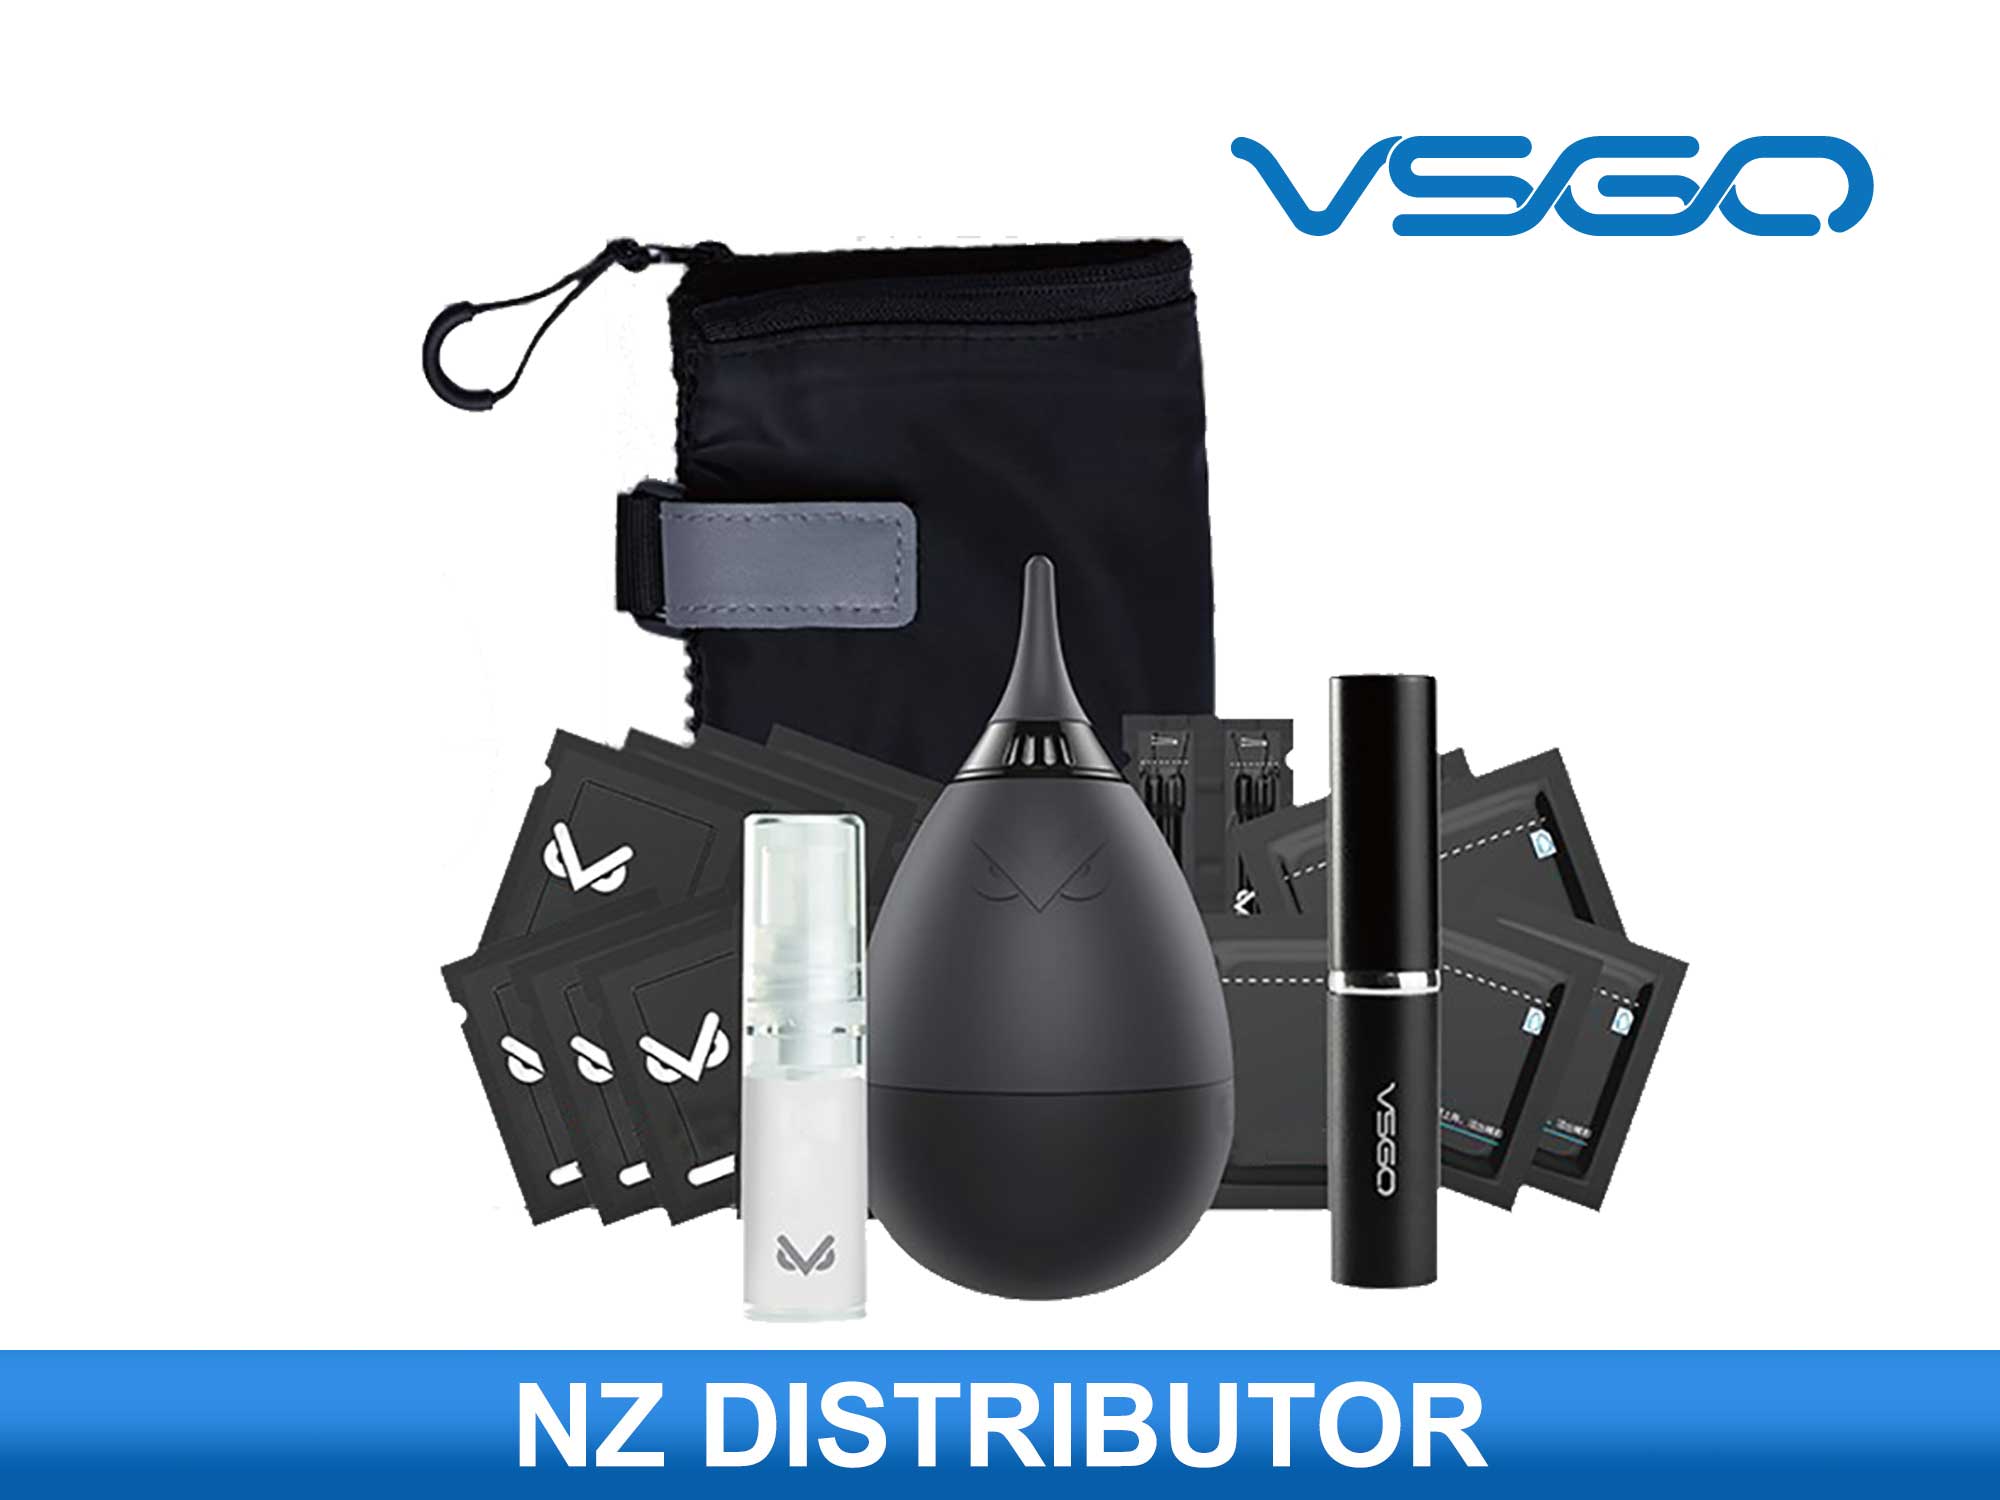 VSGO Portable Camera & Lens Cleaning Kit